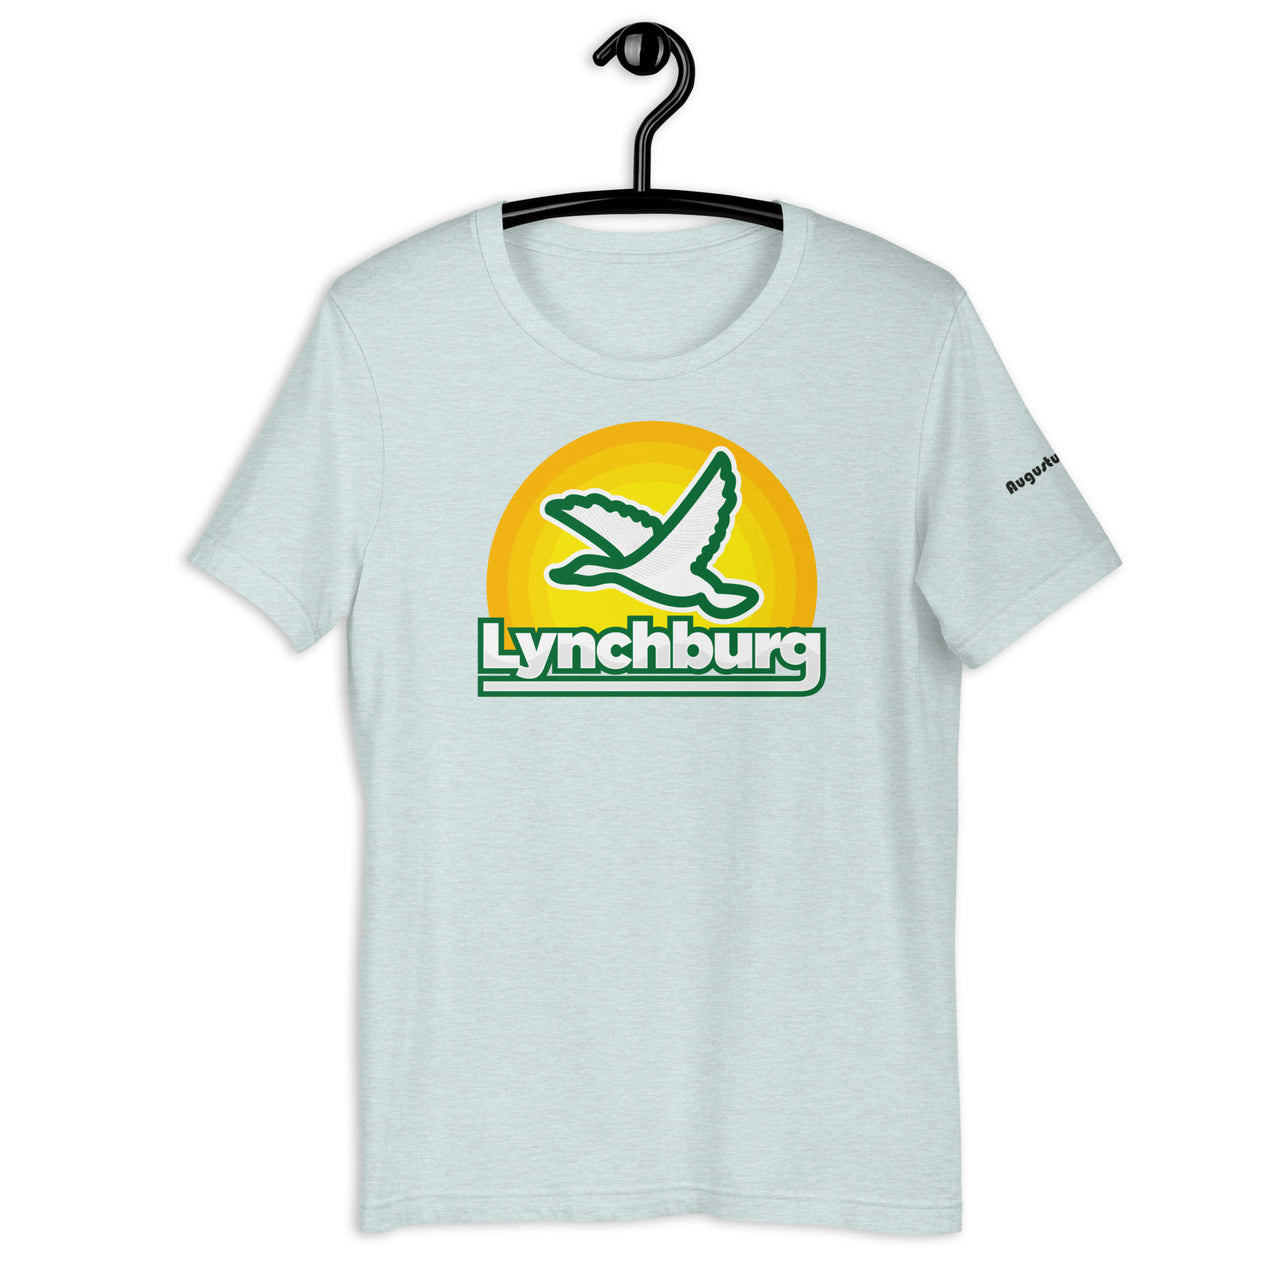 Lynchburg - Womens